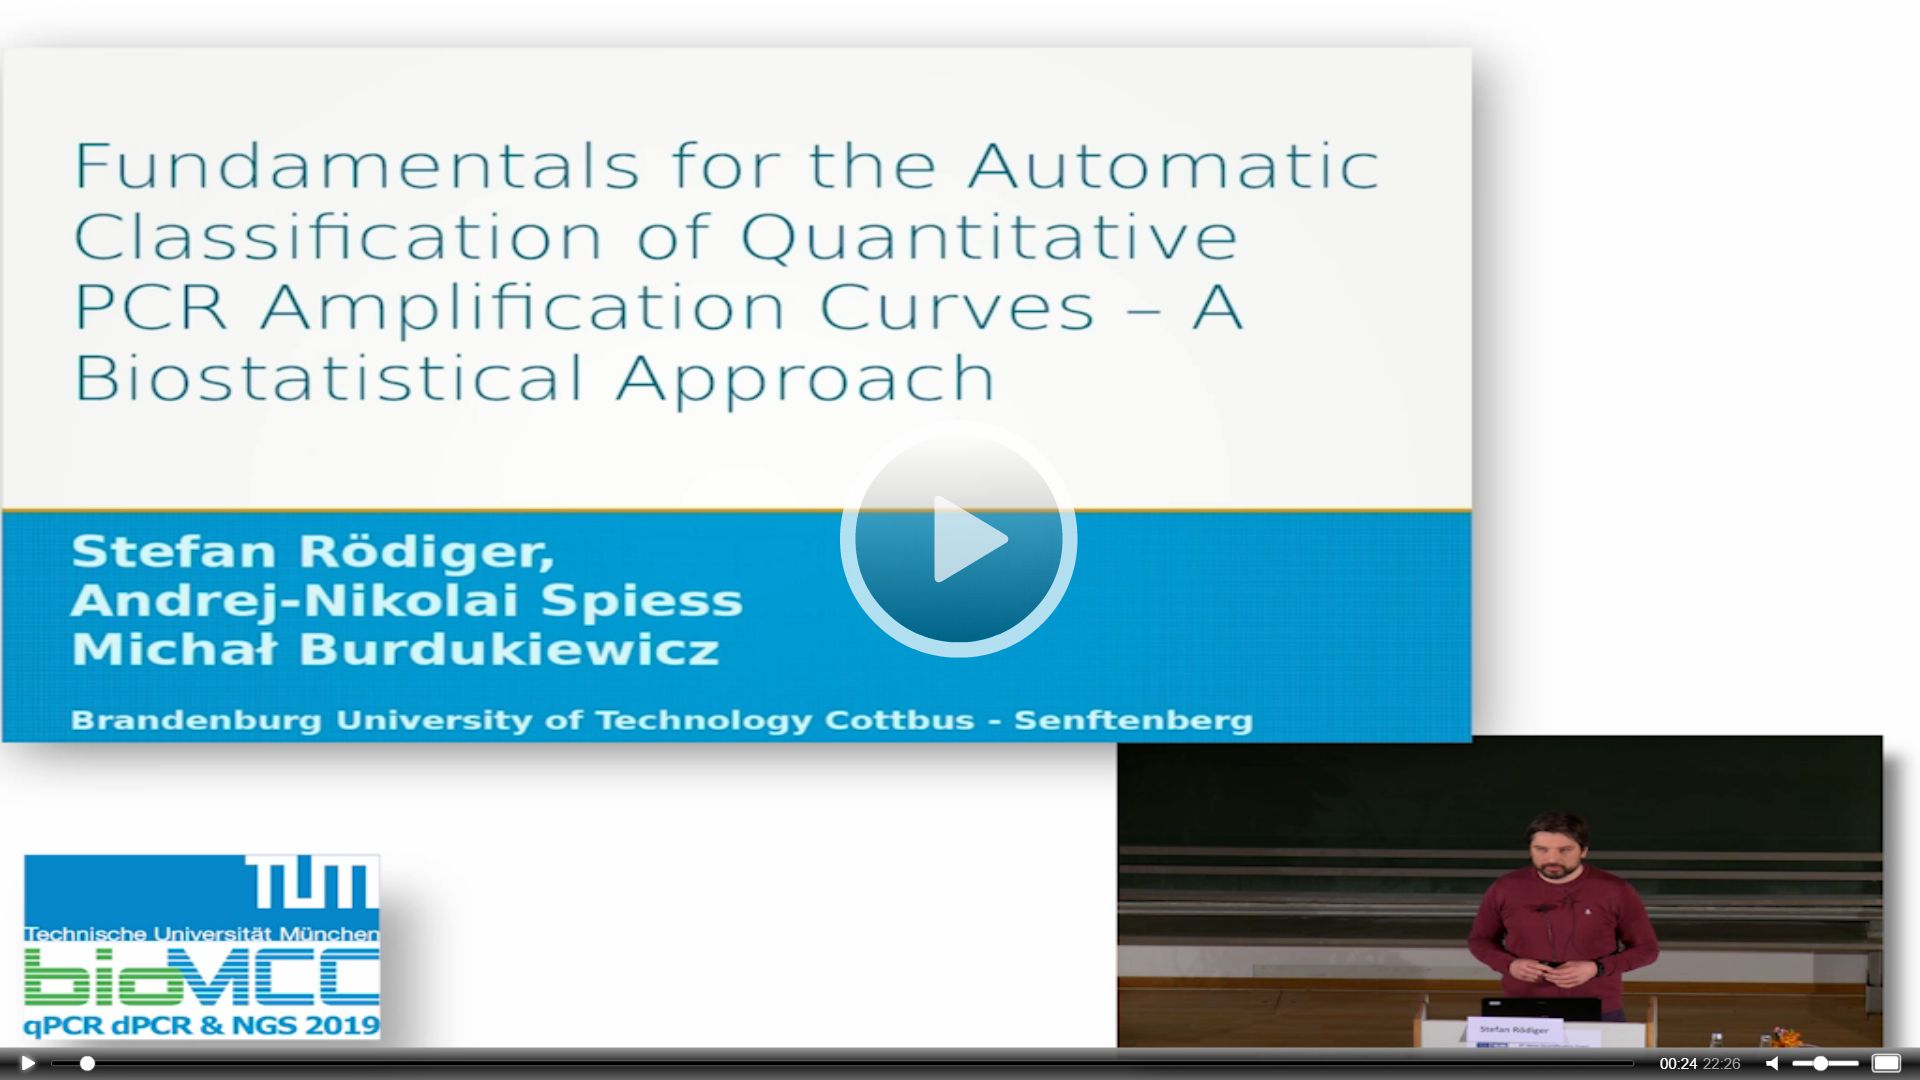 Fundamentals for the Automatic Classification of Quantitative PCR AmplificationCurves - A Biostatistical Approach